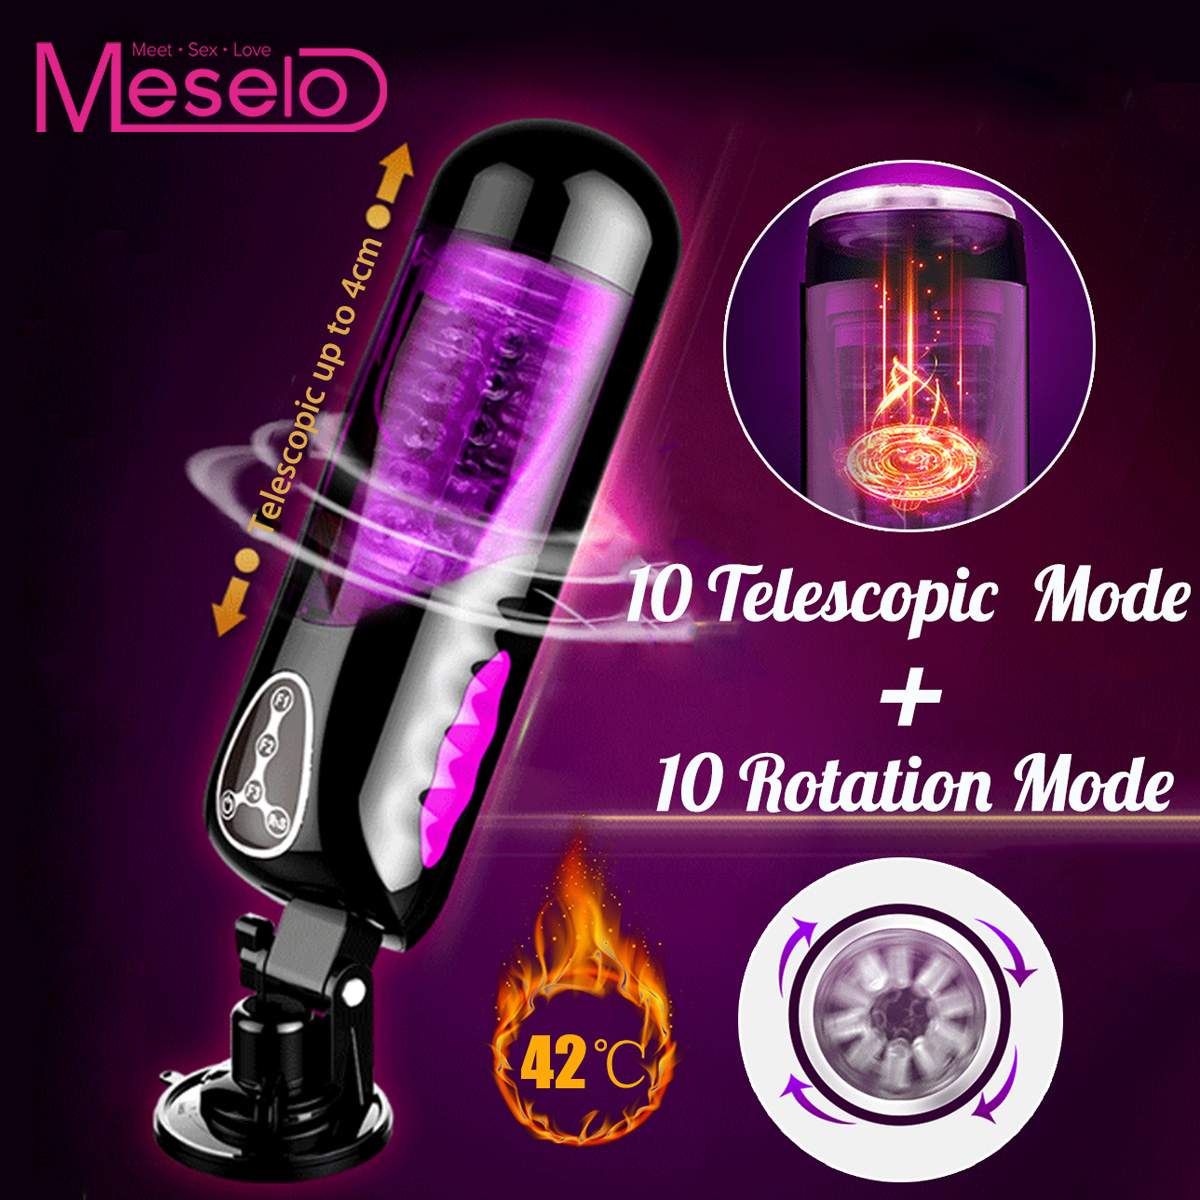 Meselo Automatic Heated Telescopic Rotating Voice Sex...